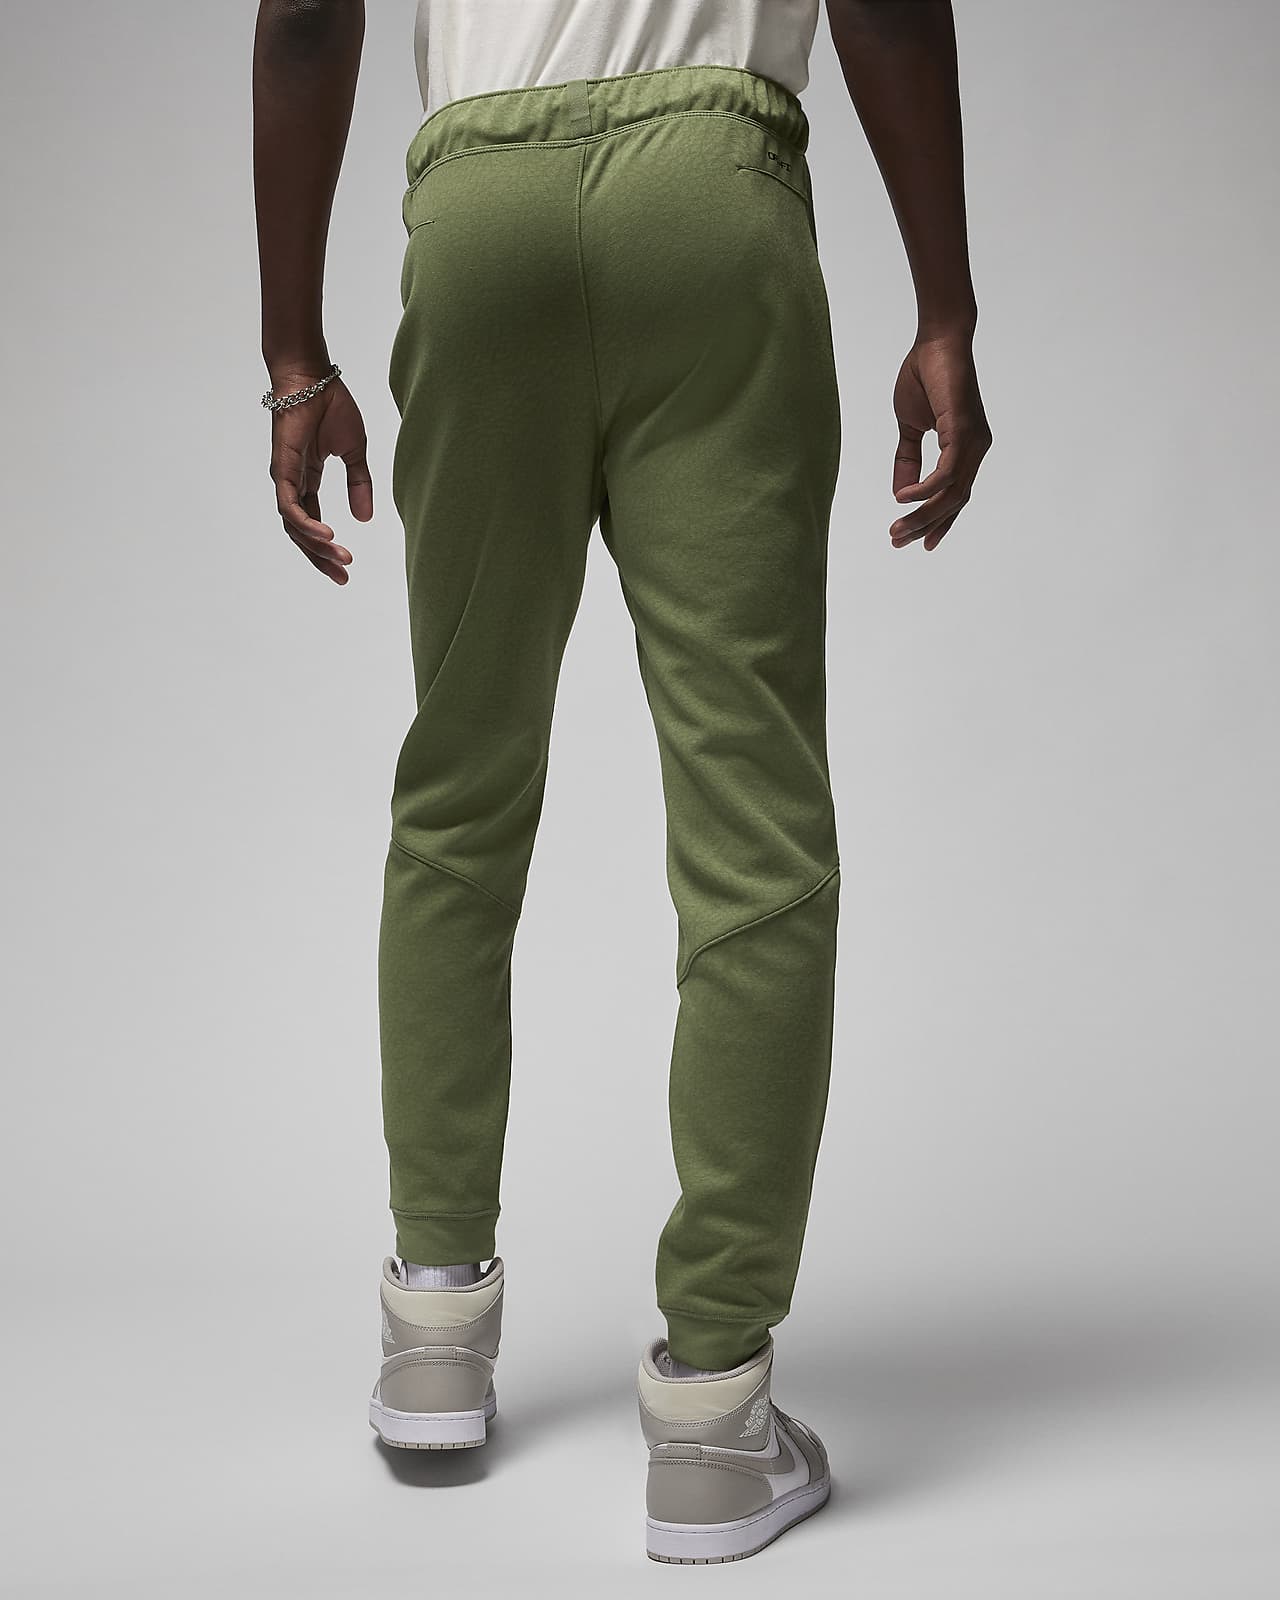 Air Jordan Compression Pants Men's Black New with Tags 4XL 406